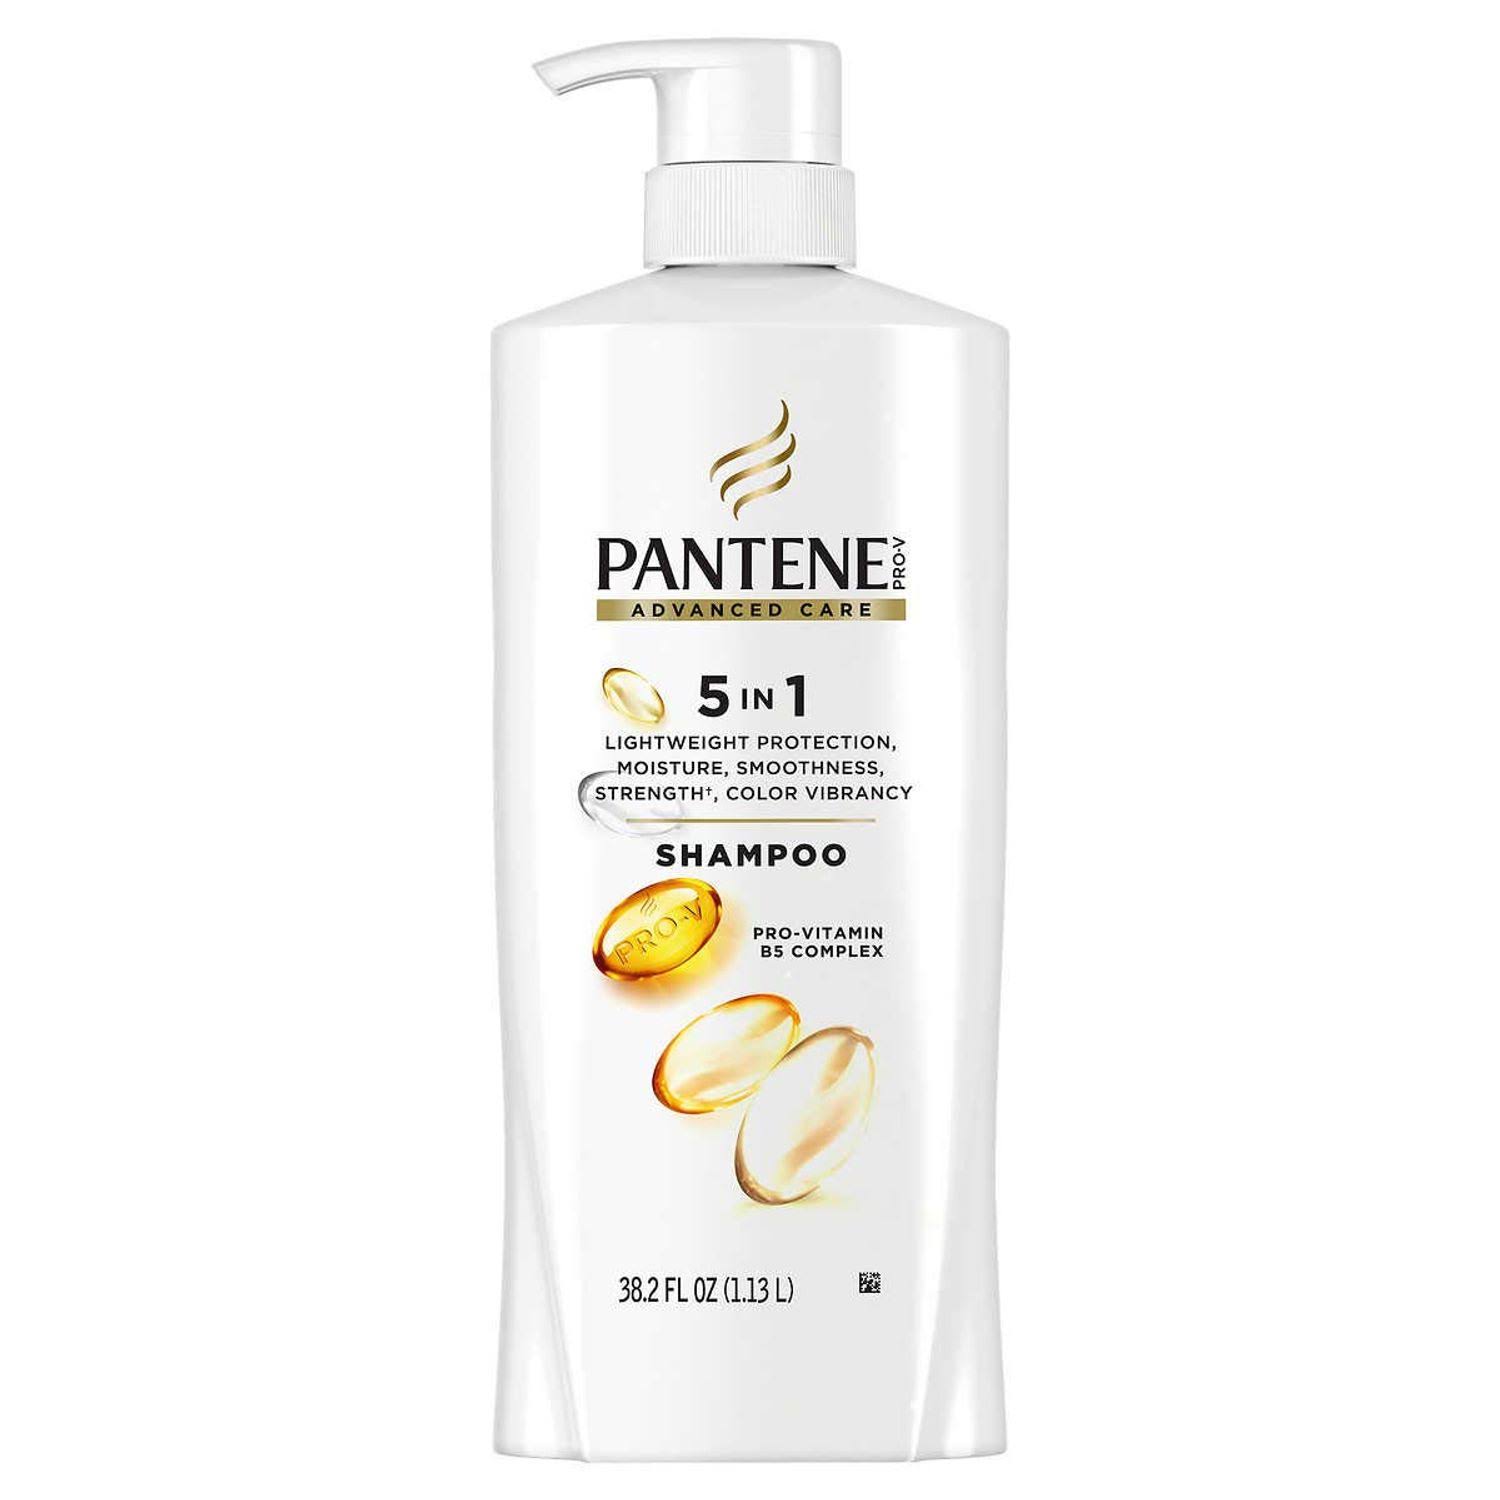 Pantene Pro-V Shampoo, 5 in 1, Advanced Care - 38.2 fl oz